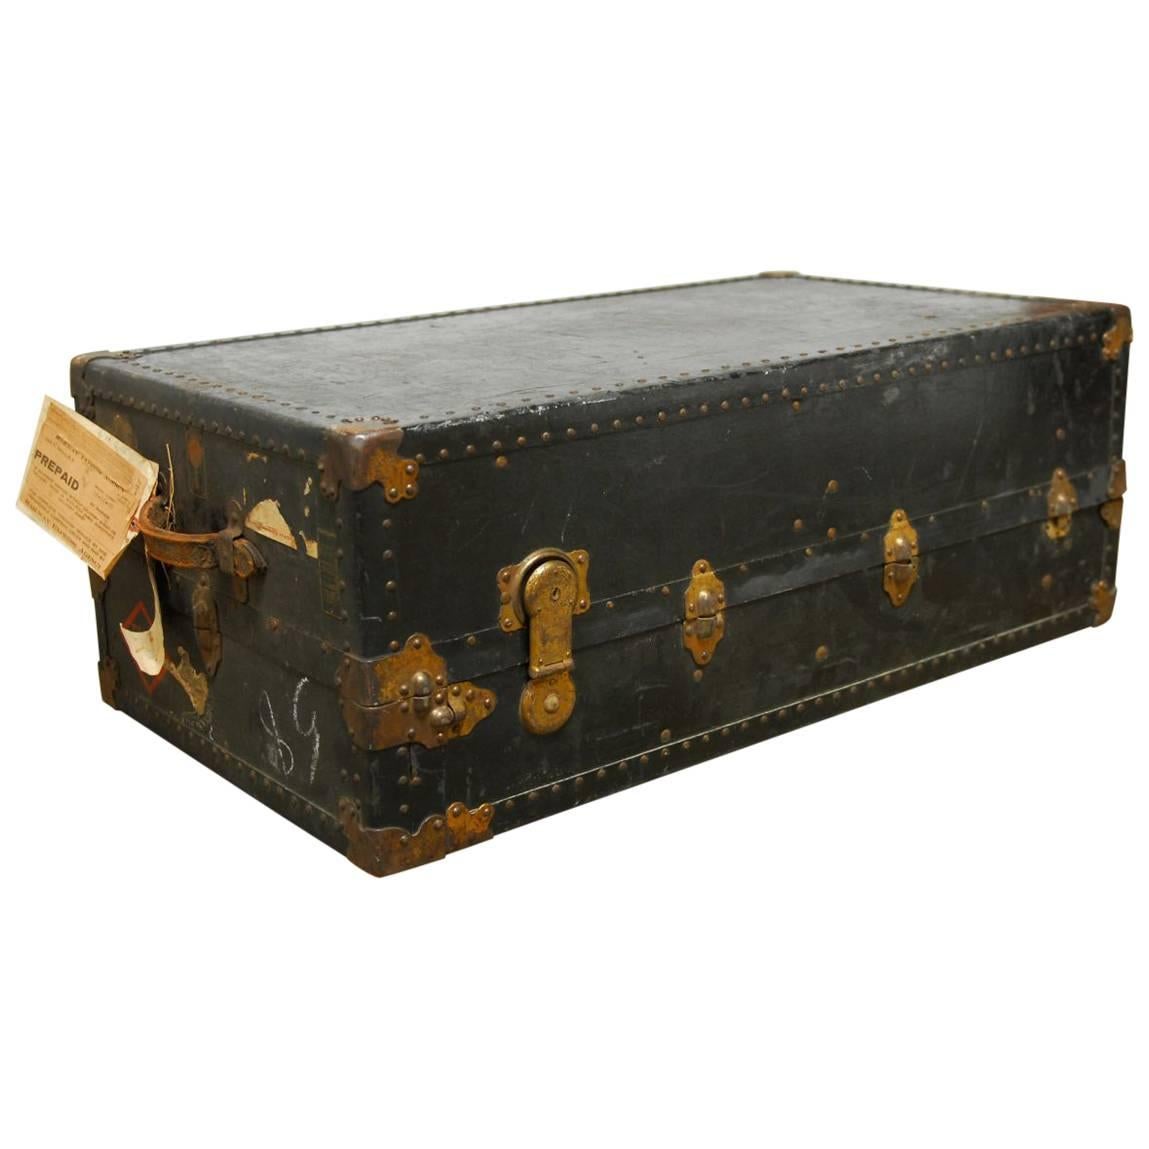 Lot - A large leather steamer trunk wardrobe, Oshkosh Trunks & Luggage